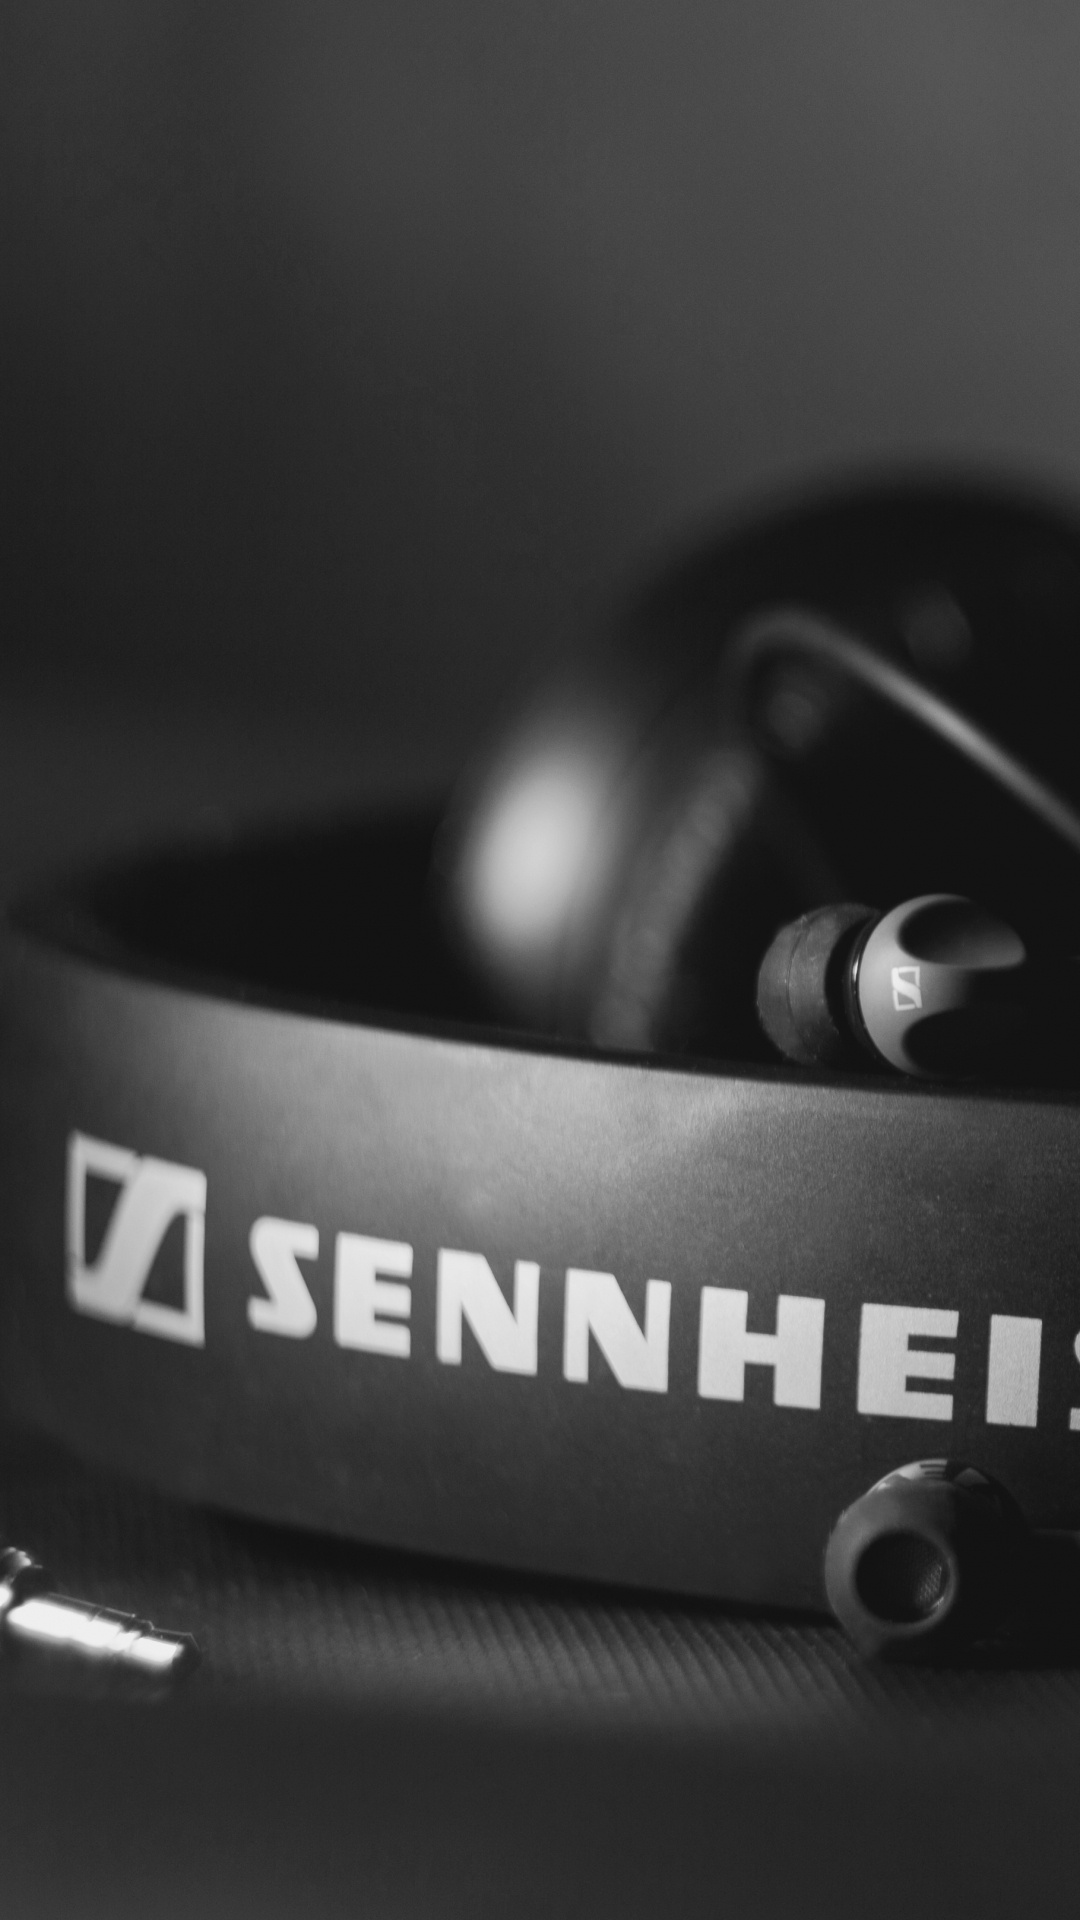 Headphones, Black and White, Sennheiser, Headset, Audio Equipment. Wallpaper in 1080x1920 Resolution